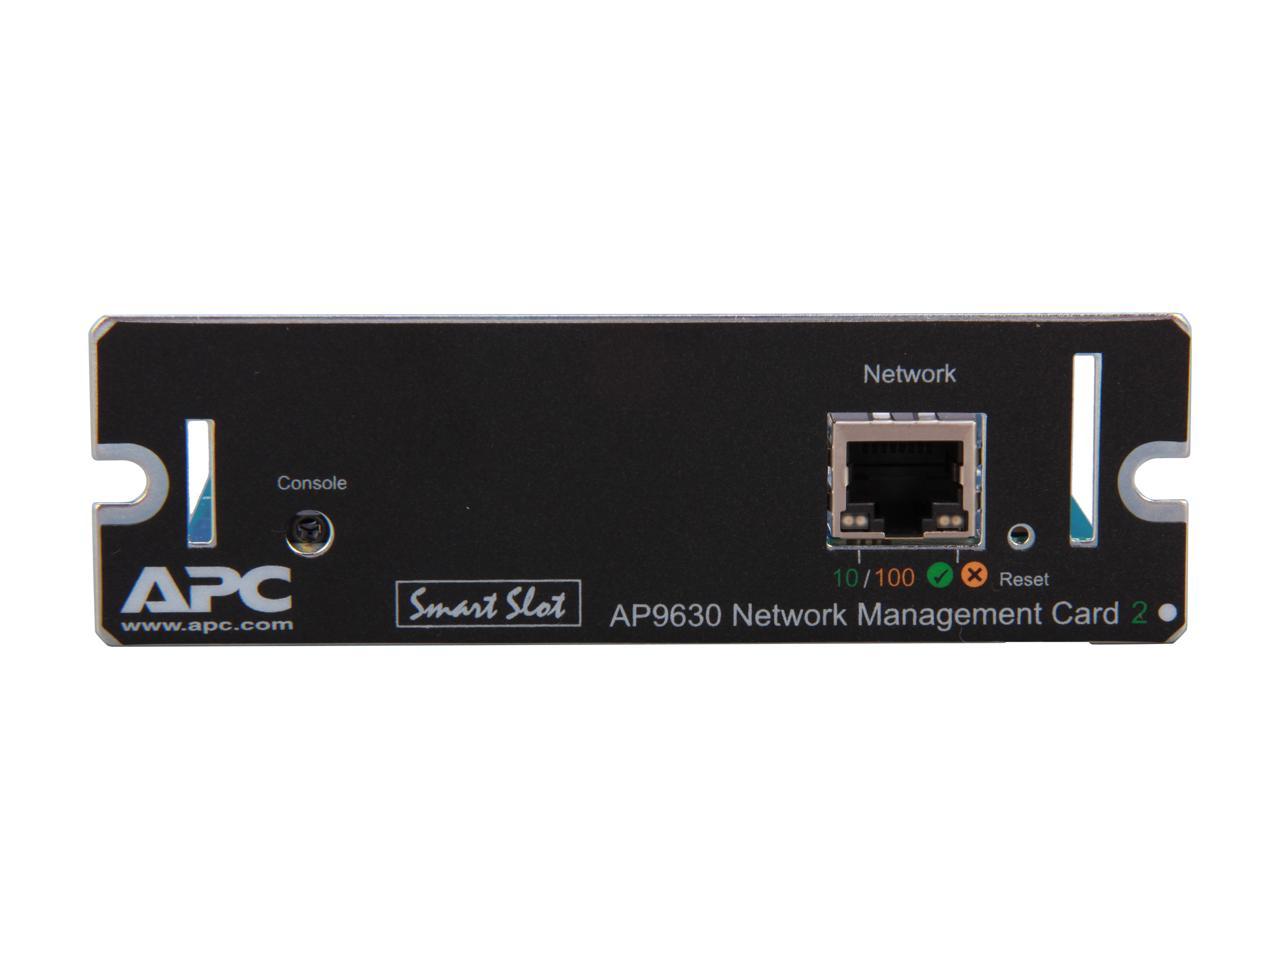 APC AP9630 UPS Network Management Card 2